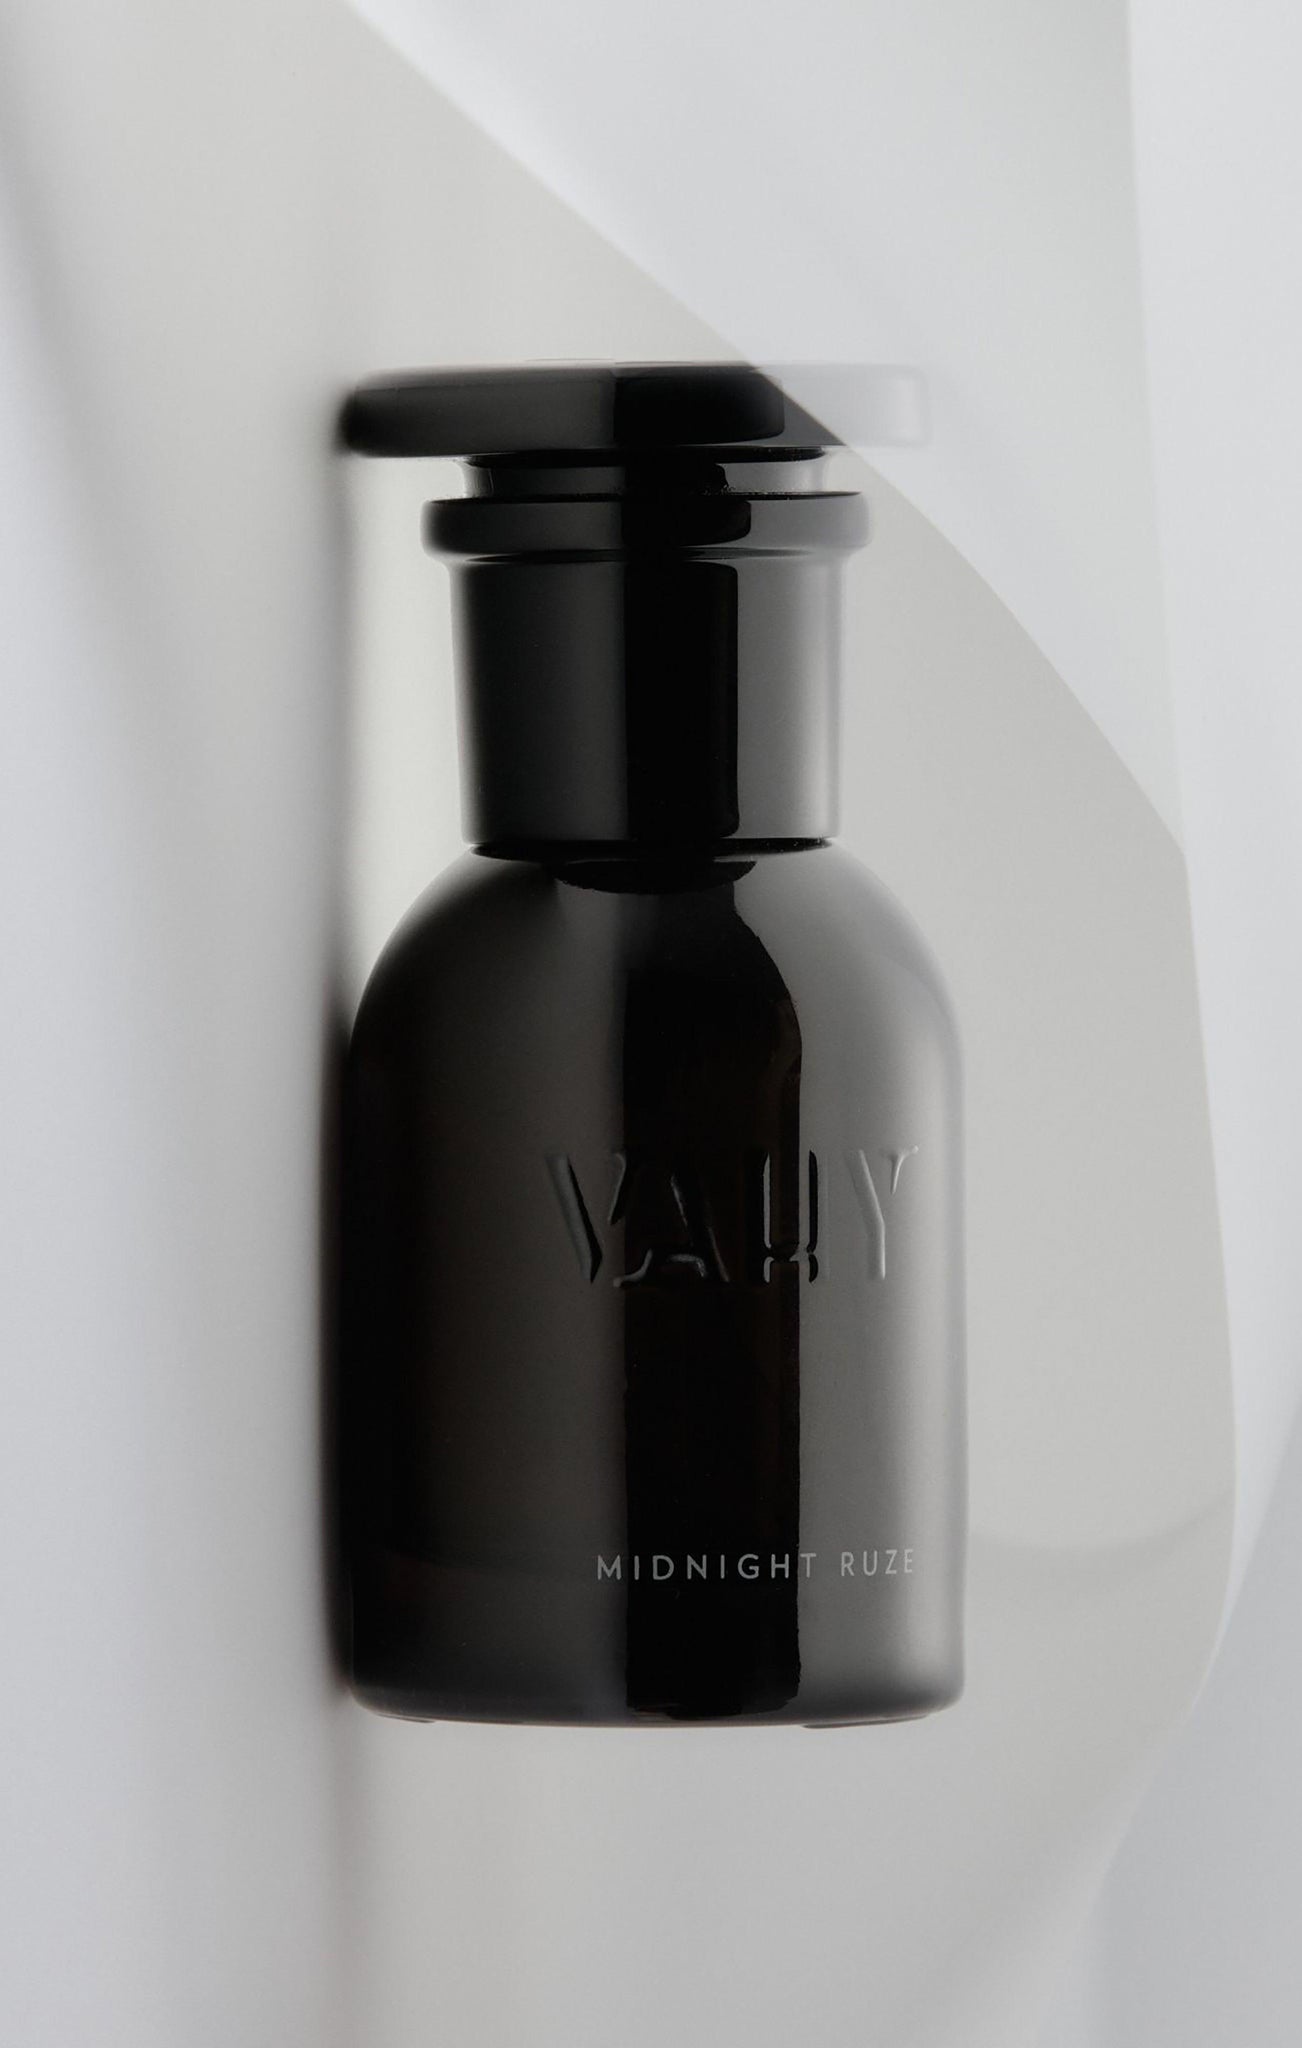 VAHY Midnight Ruze Perfume 50ml - Skin and Threads